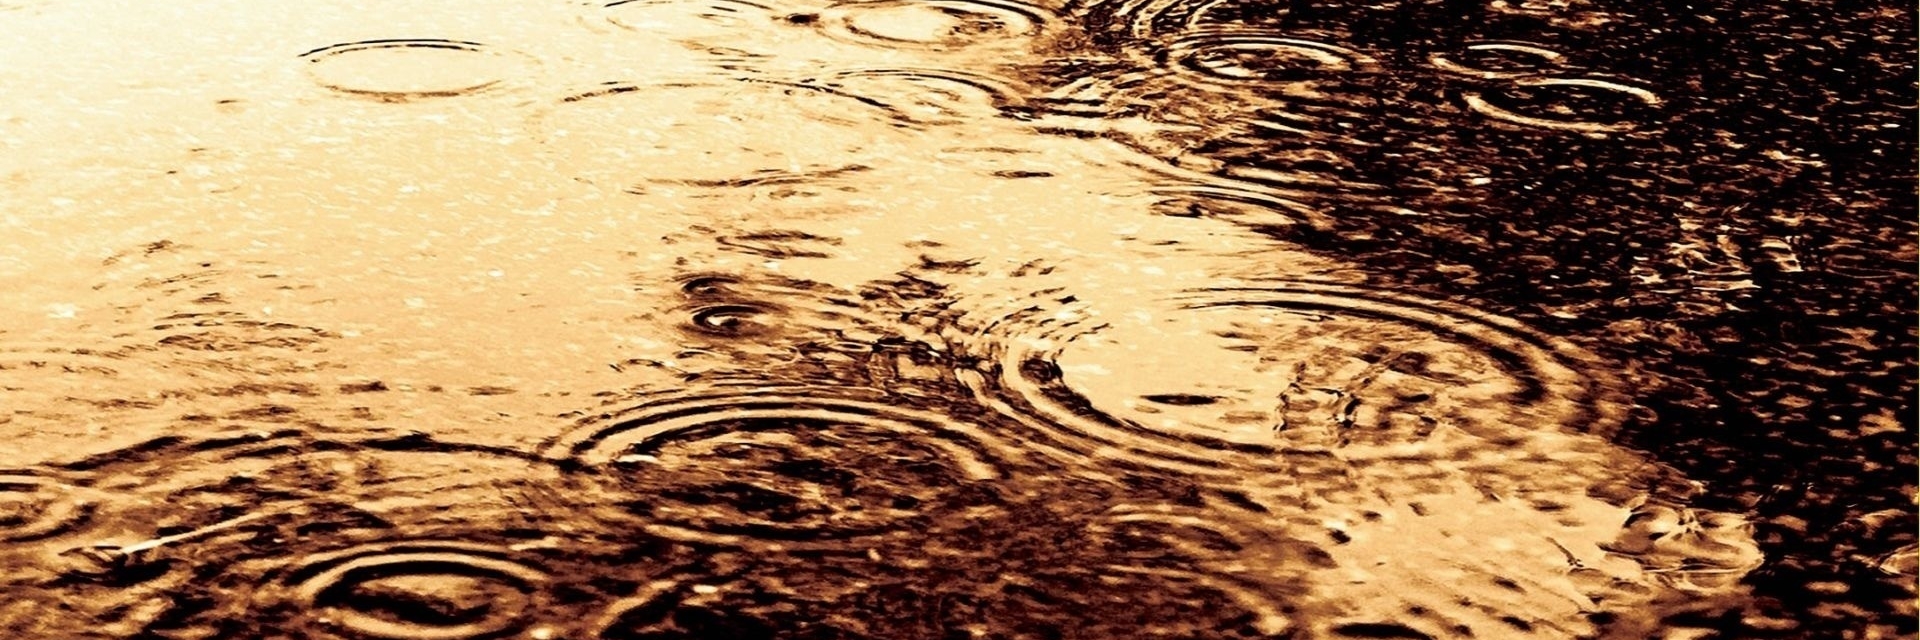 Желто коричневая вода. Круги на воде. Капли дождя на воде. Коричневая вода. Красивая лужа.